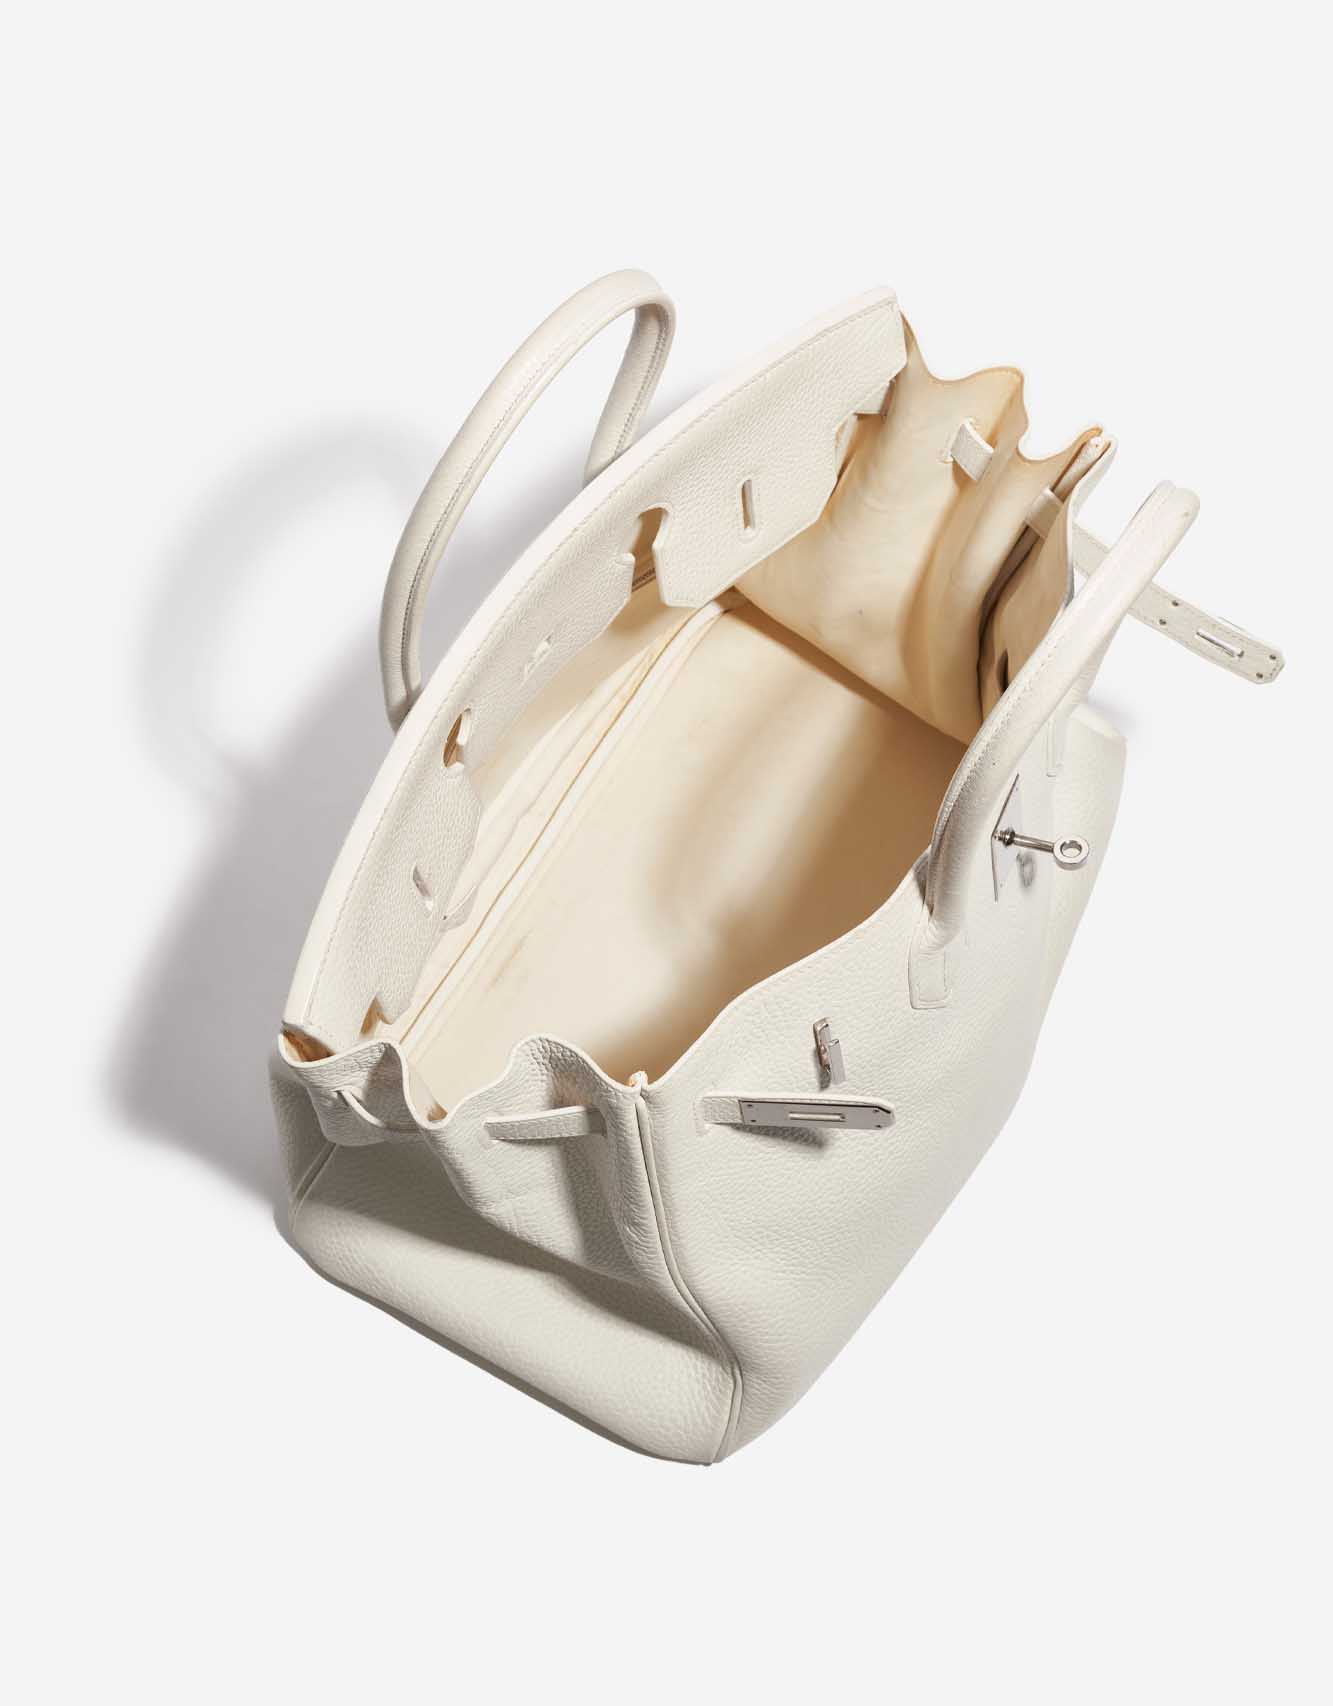 Pre-owned Hermès bag Birkin 35 Clemence White White Inside | Sell your designer bag on Saclab.com